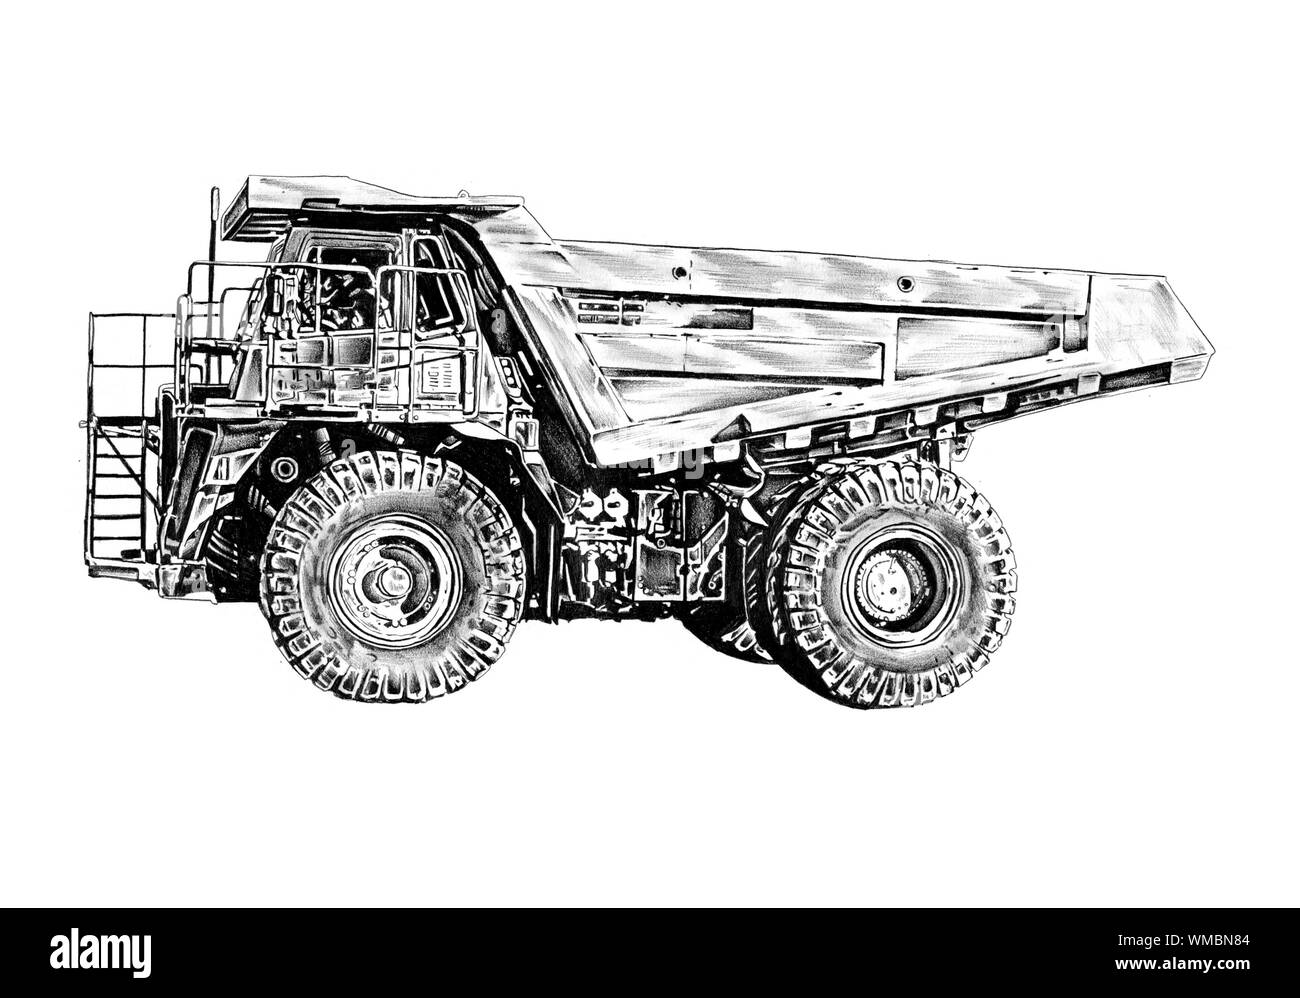 Dump truck illustration drawing art Stock Photo  Alamy